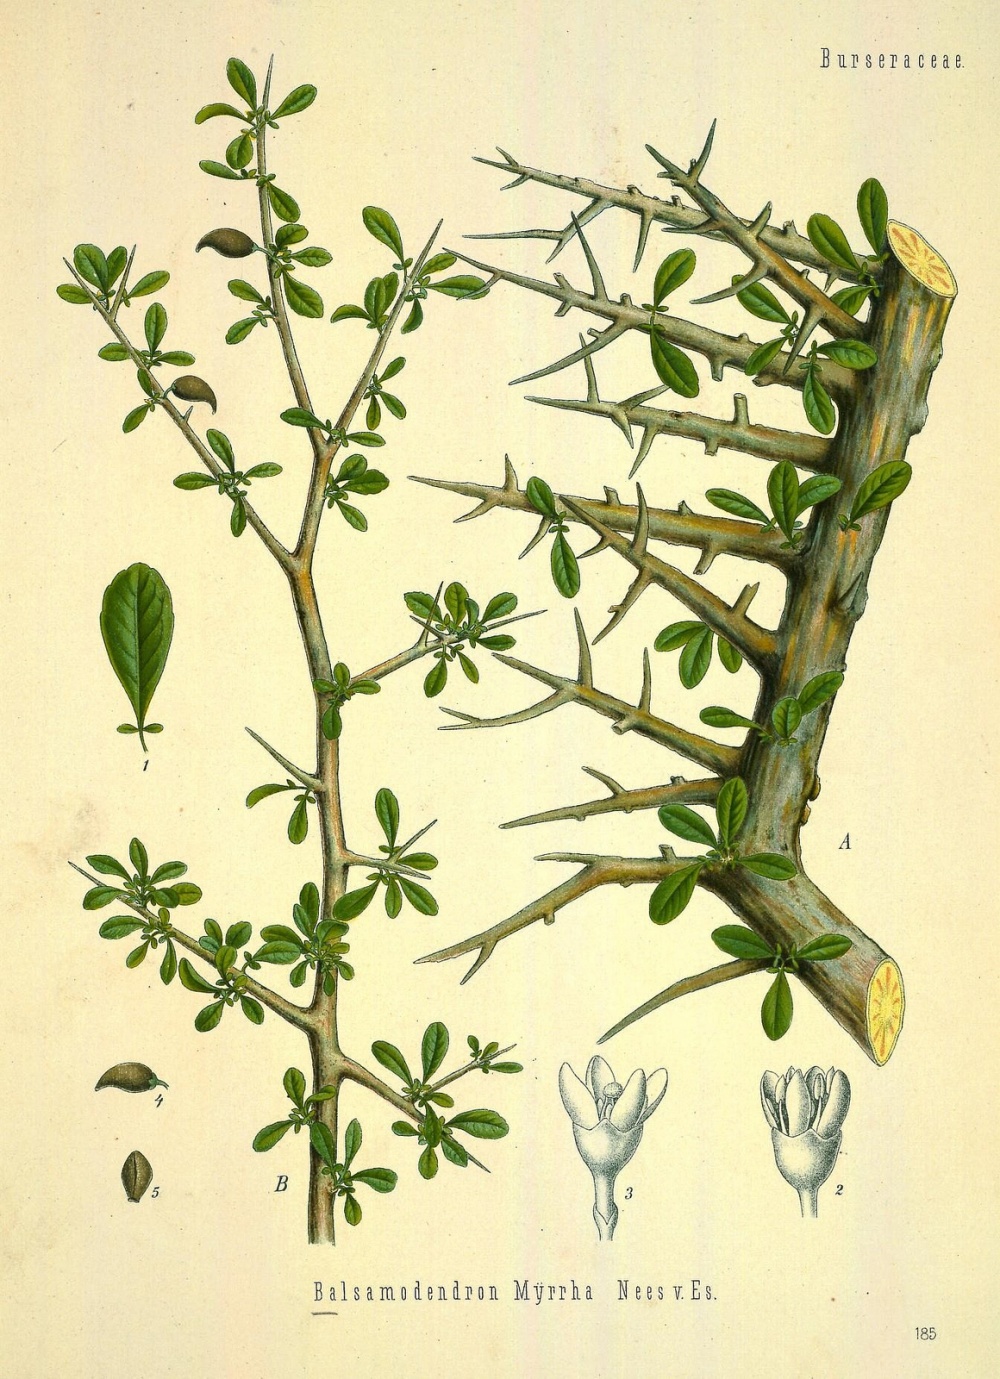 Balsamodendron Myrrha